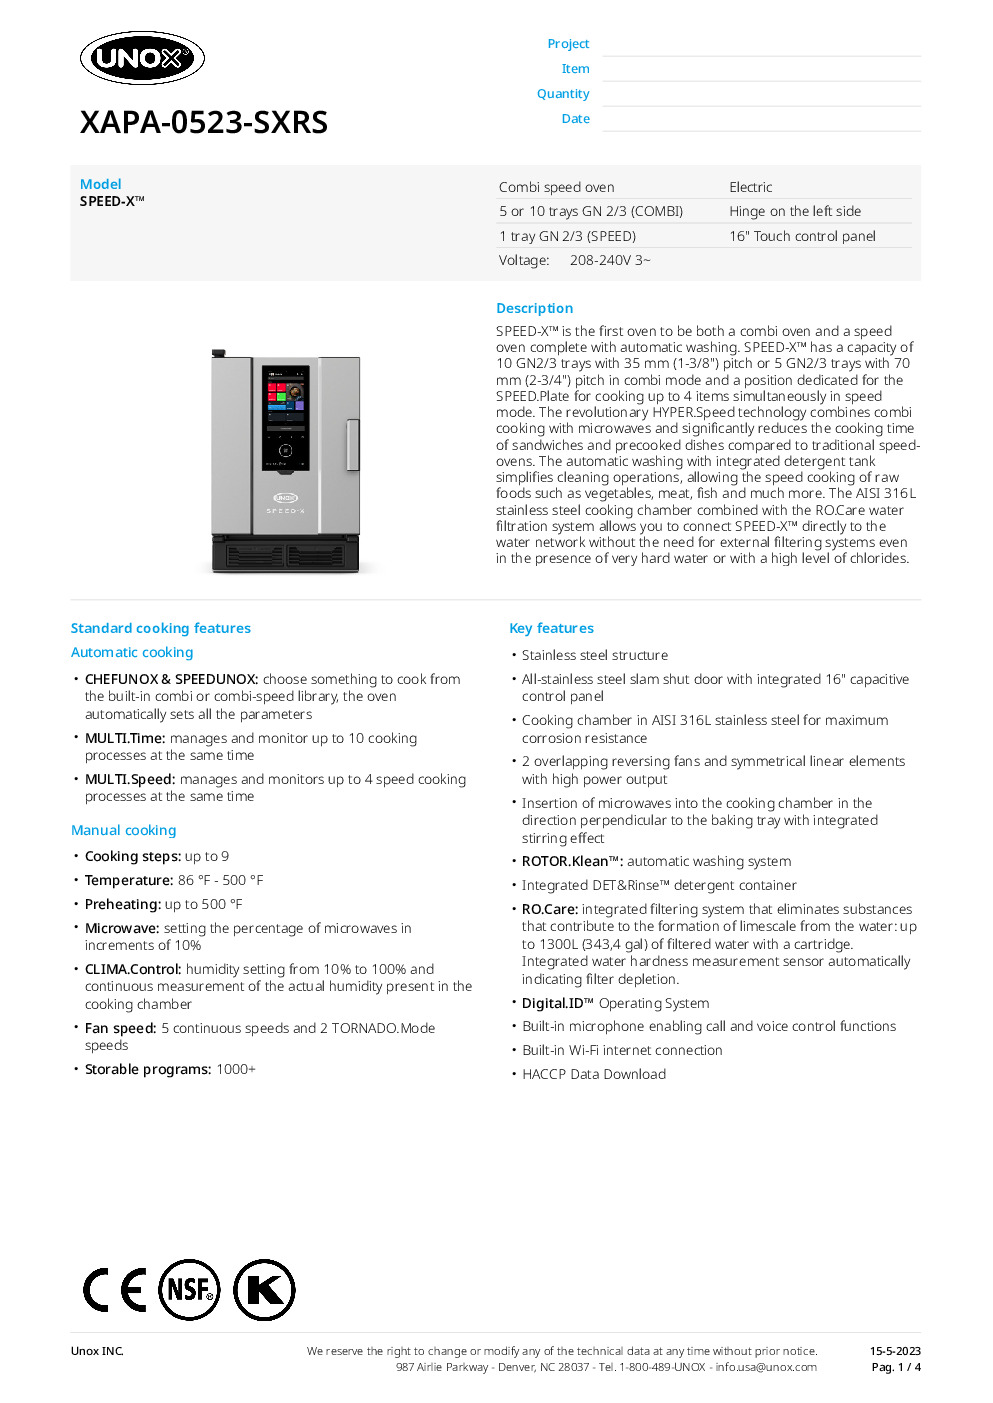 UNOX XAPA-0523-SXRS Electric Combi Oven